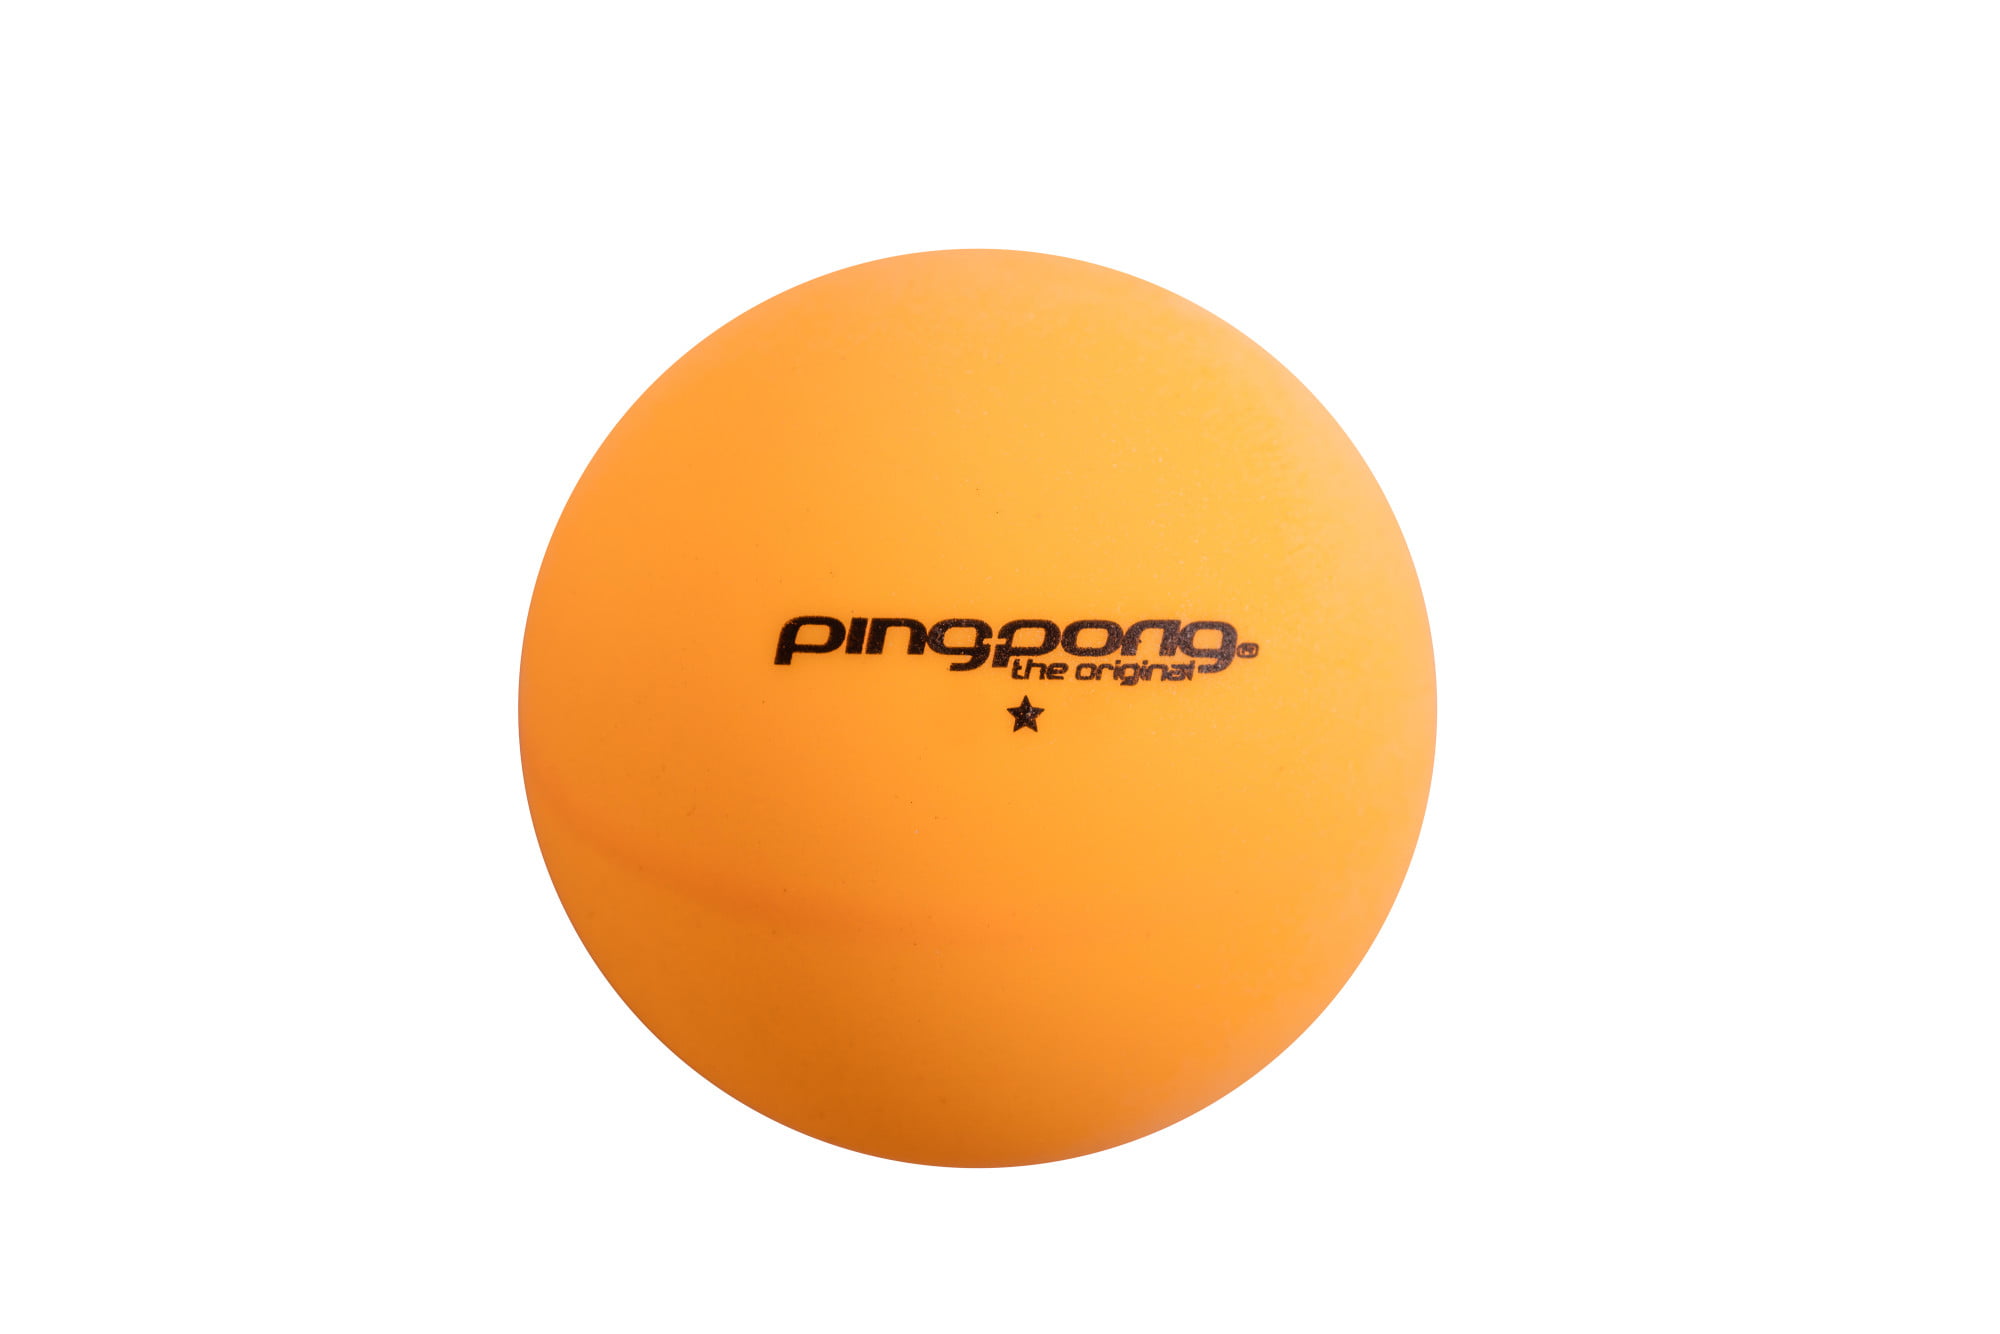 Penn 6-PK 40mm TABLE TENNIS BALLS Orange PING PONG 3-Star PROFESSIONAL 